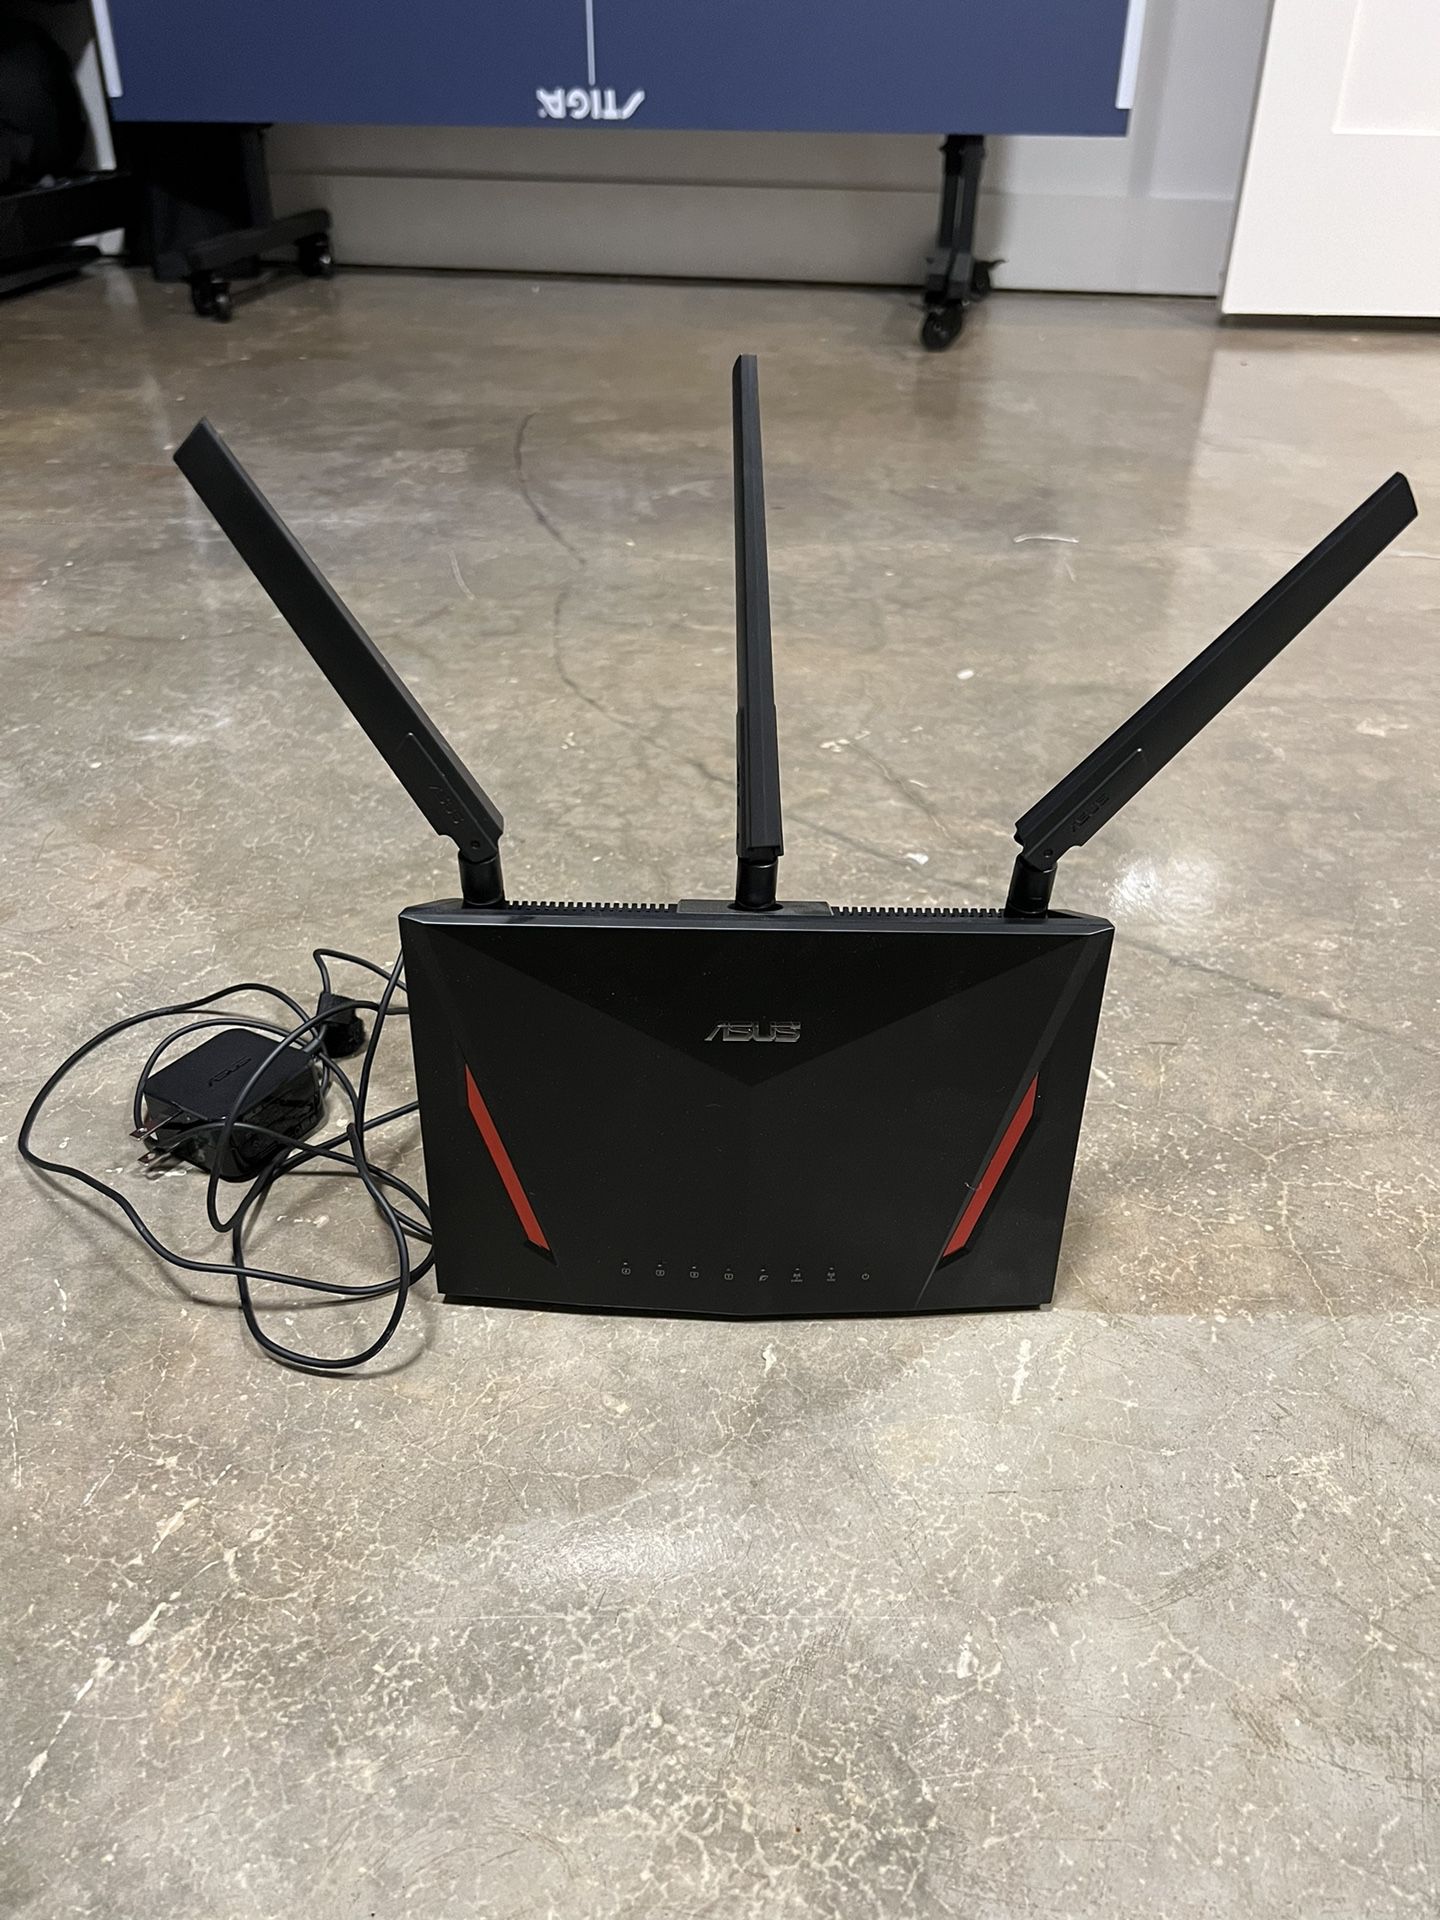 Asus WiFi Mesh Wireless Router - RT-AC86U